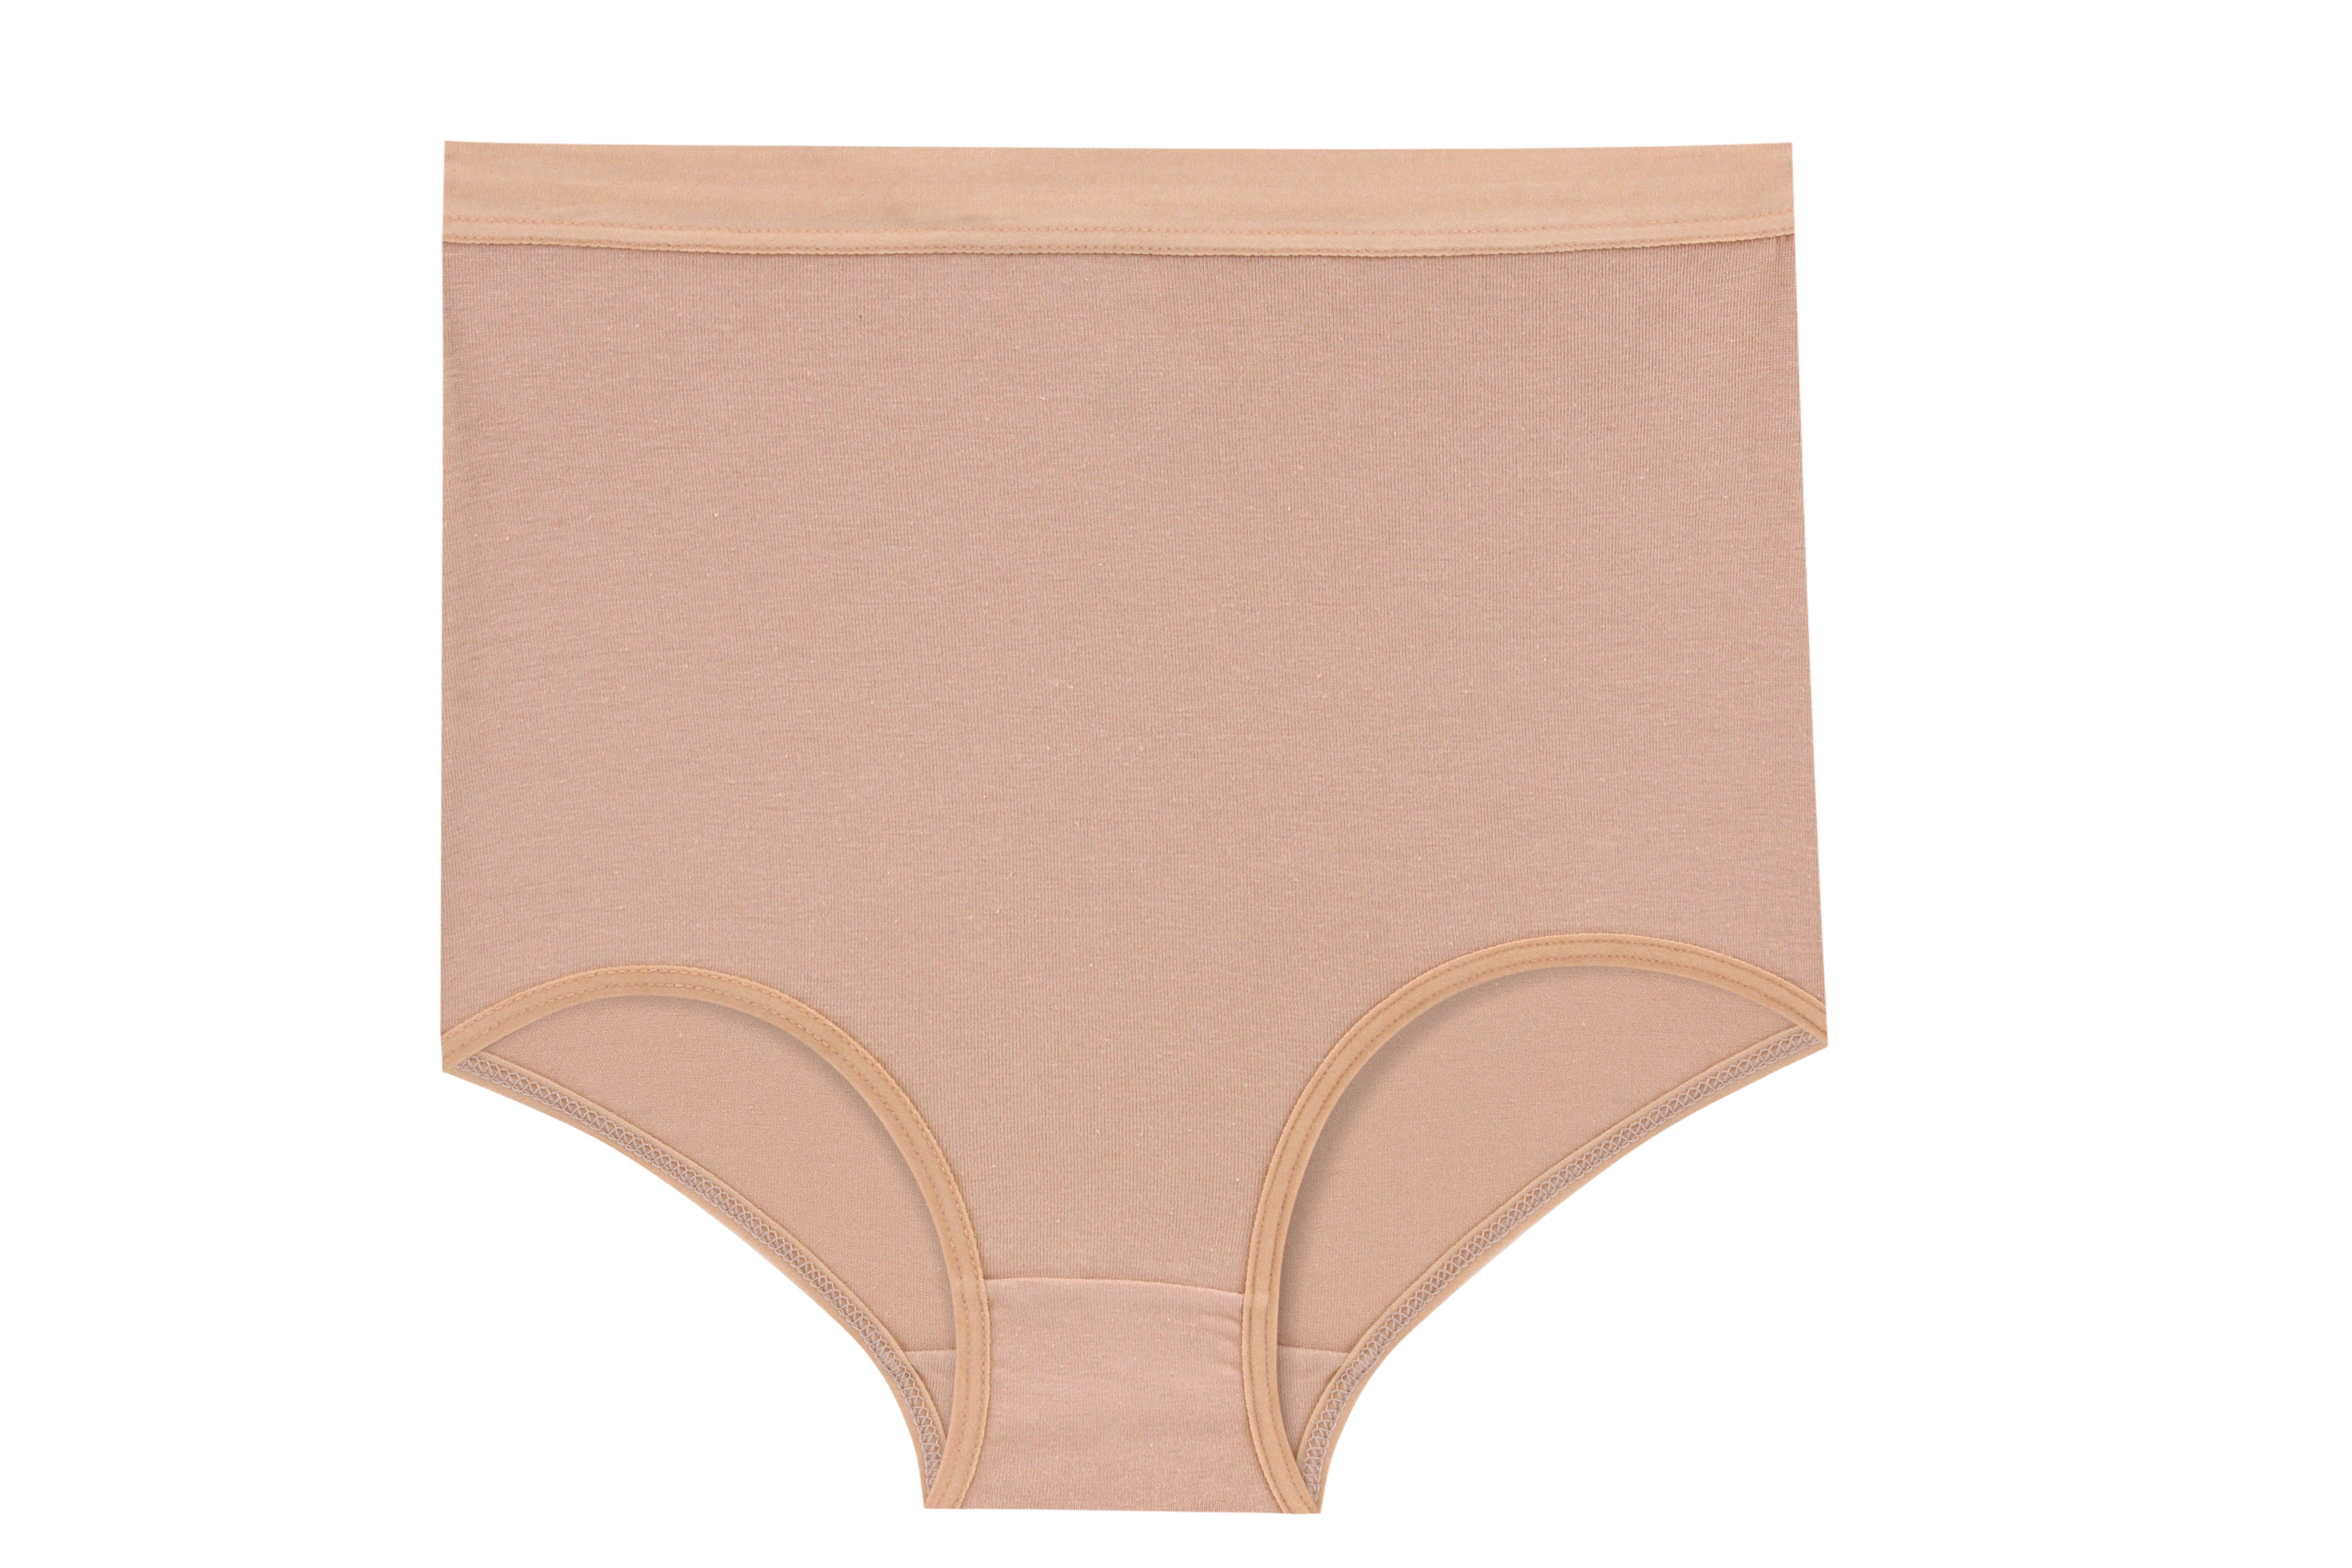 Women's Maxi Style Underwear